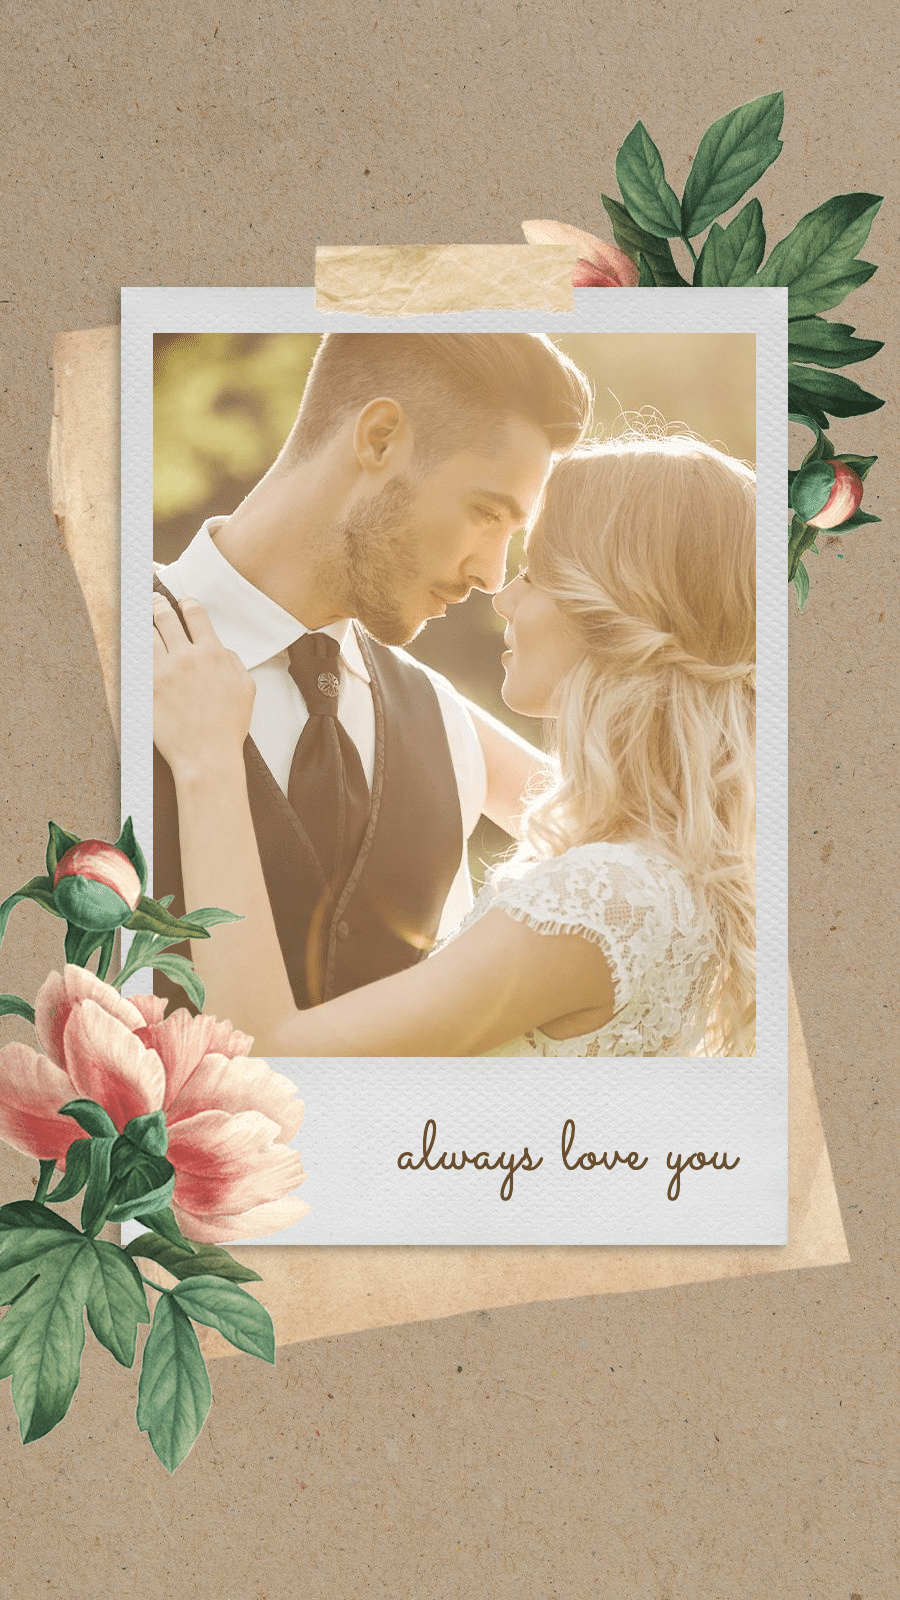 Gray Orange Background Flowers Frame Wedding Photo Fashion Simple Style Poster Instagram Post预览效果